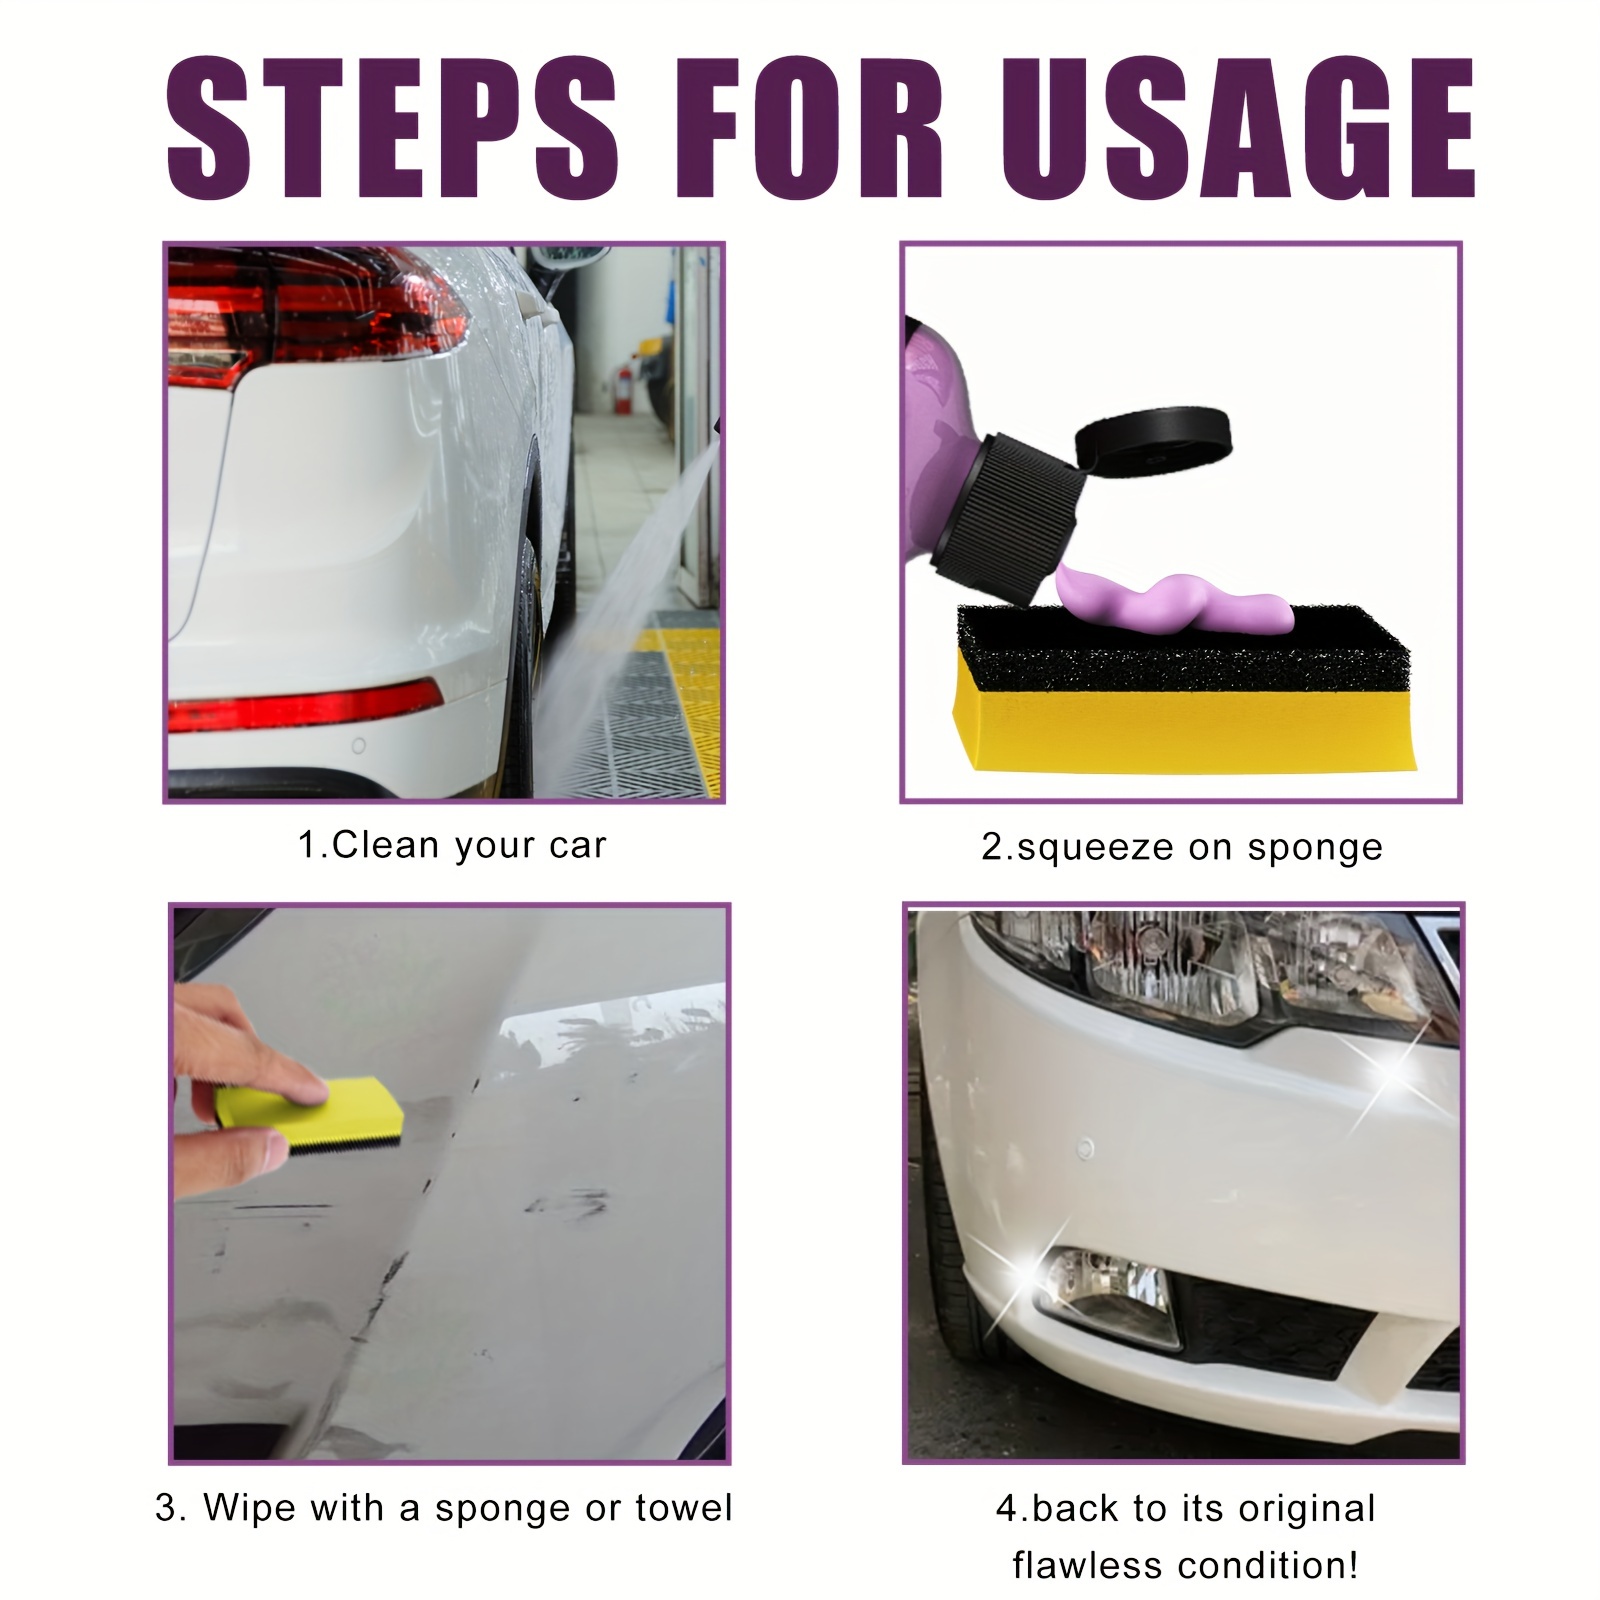 Car Scratch Remover Car Paint Restorer And Decontamination Clean